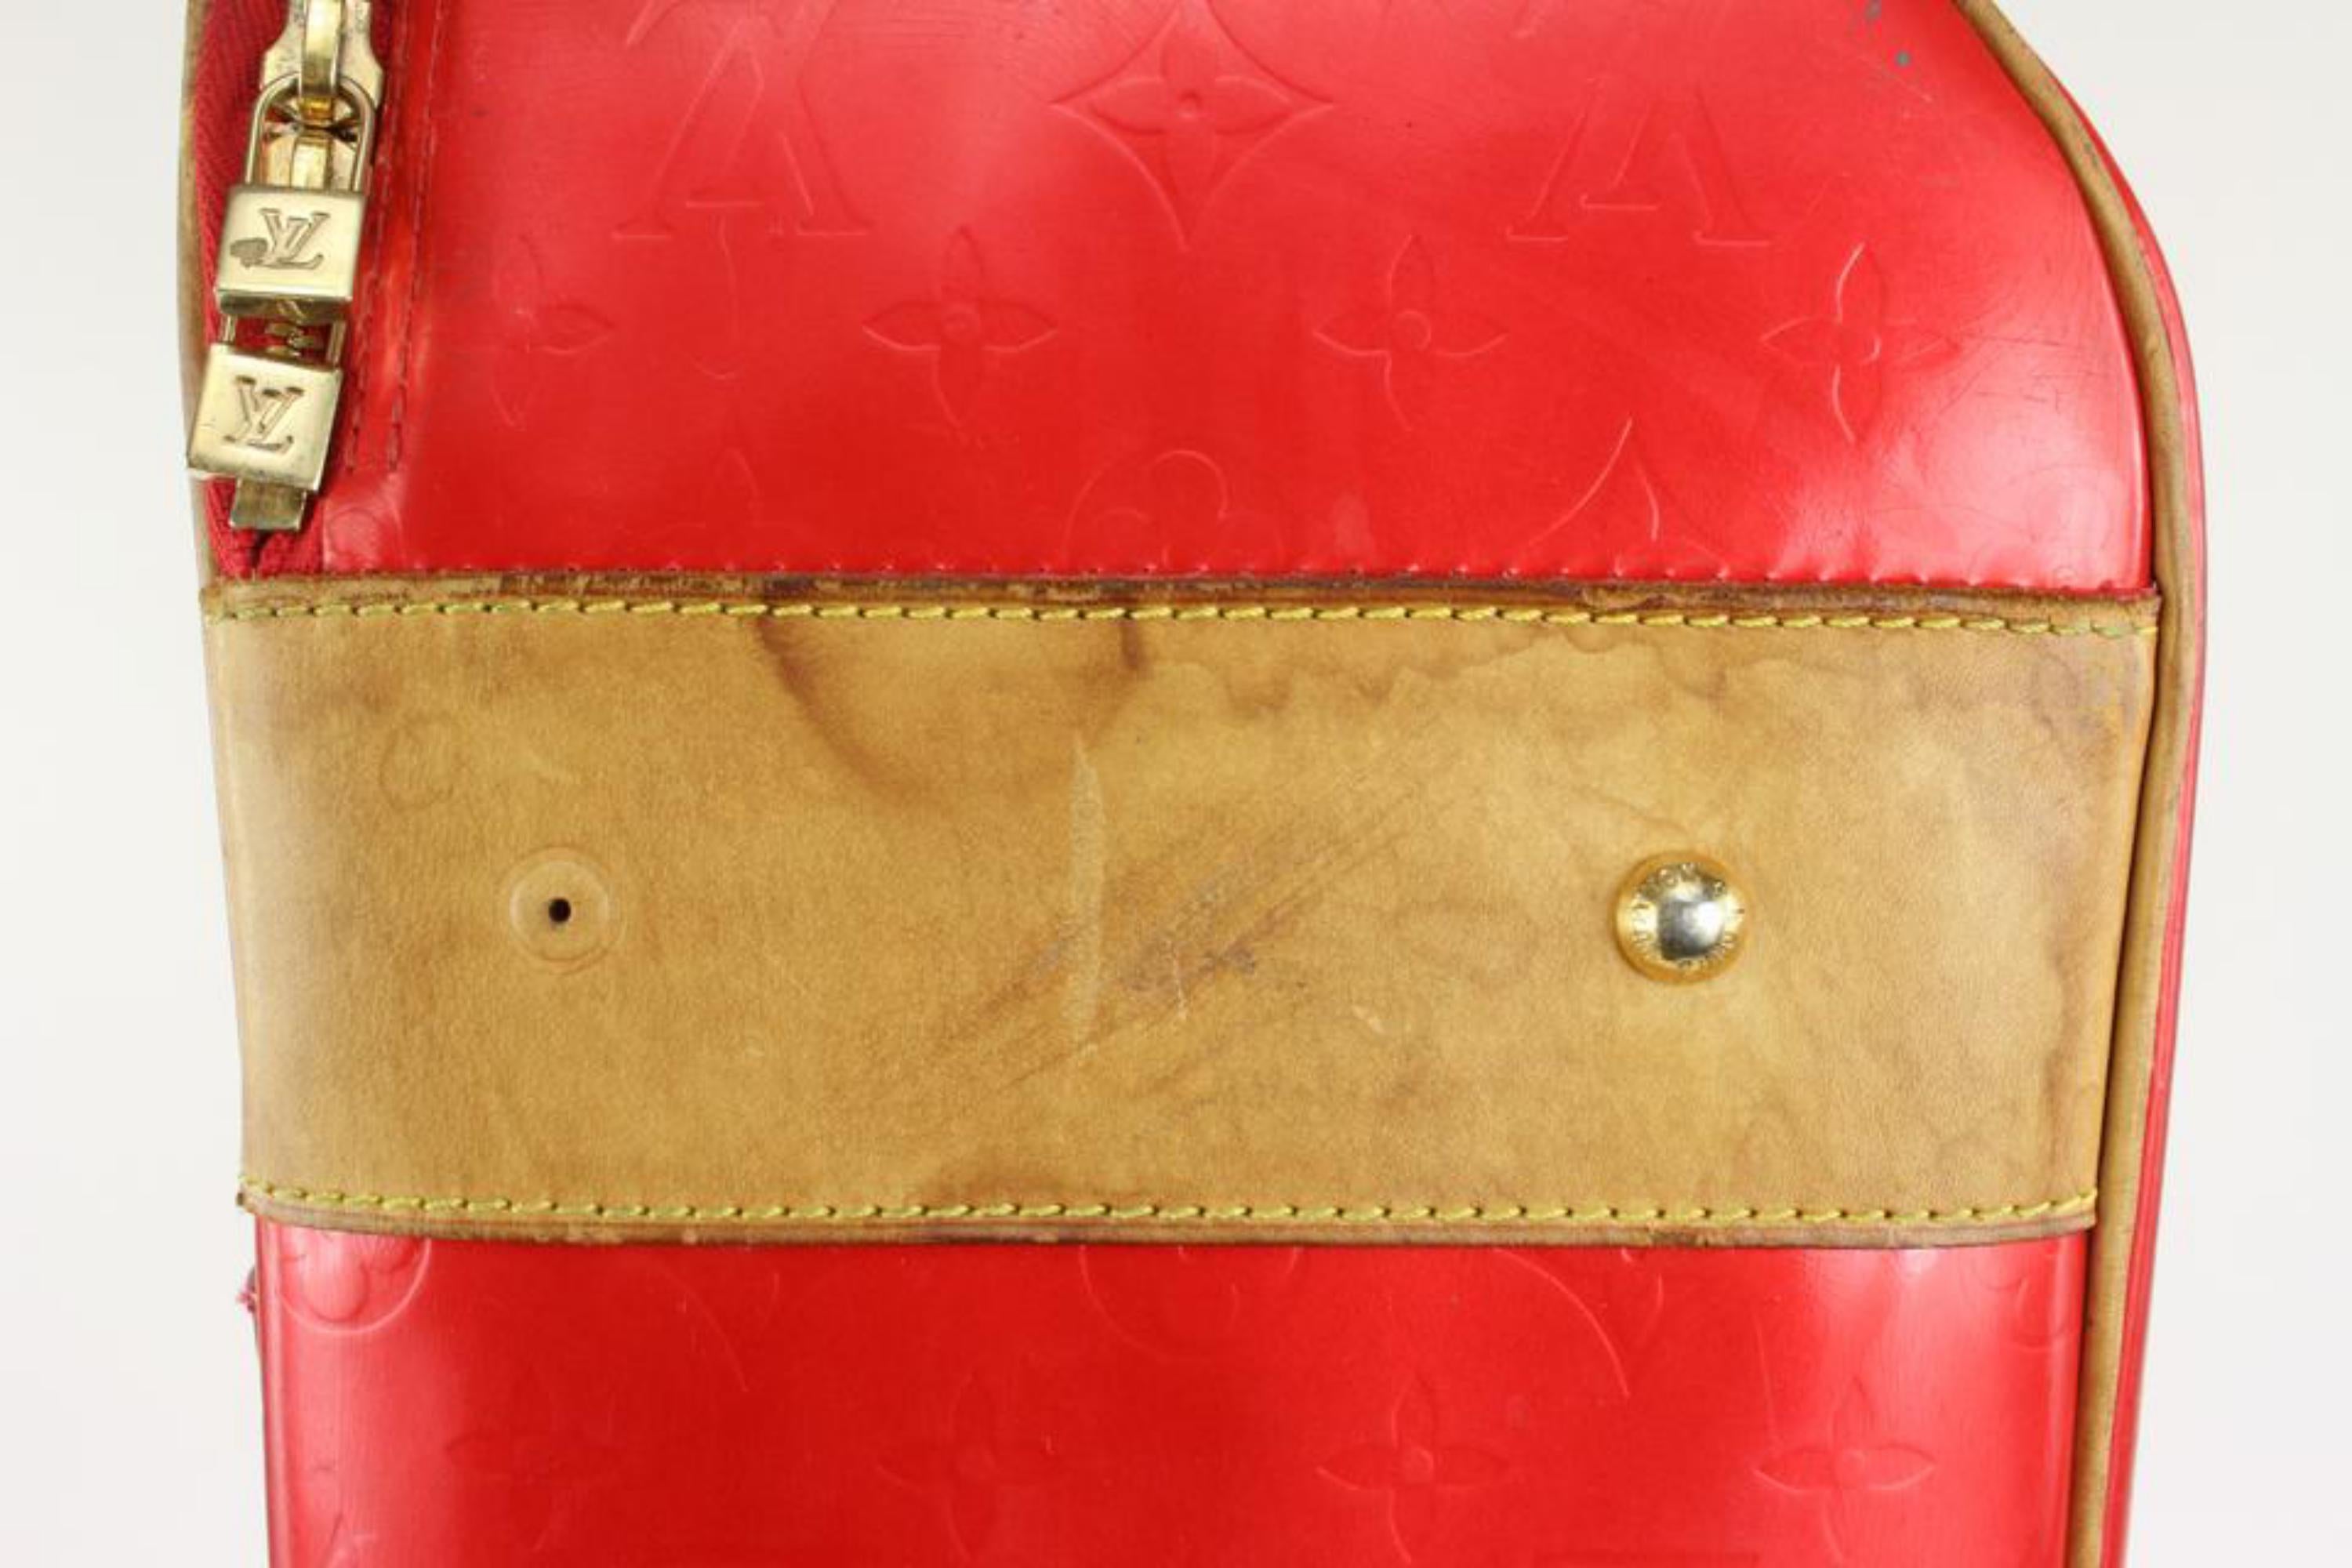 Louis Vuitton Red Monogram Vernis Pegase 45 Suitcase Bag Louis Vuitton